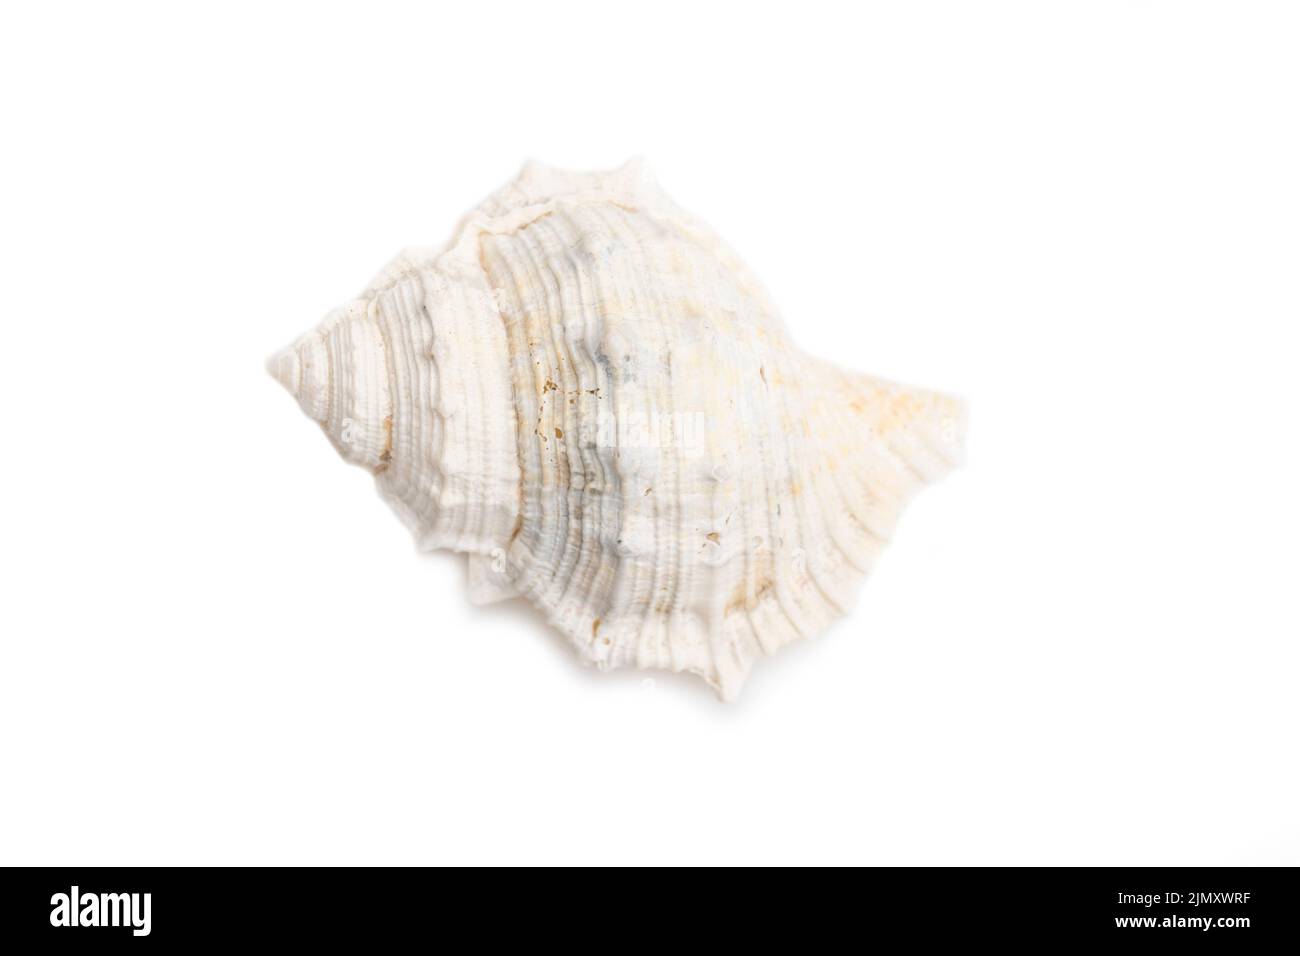 Image of white conch seashells on a white background. Undersea Animals. Sea Shells. Stock Photo